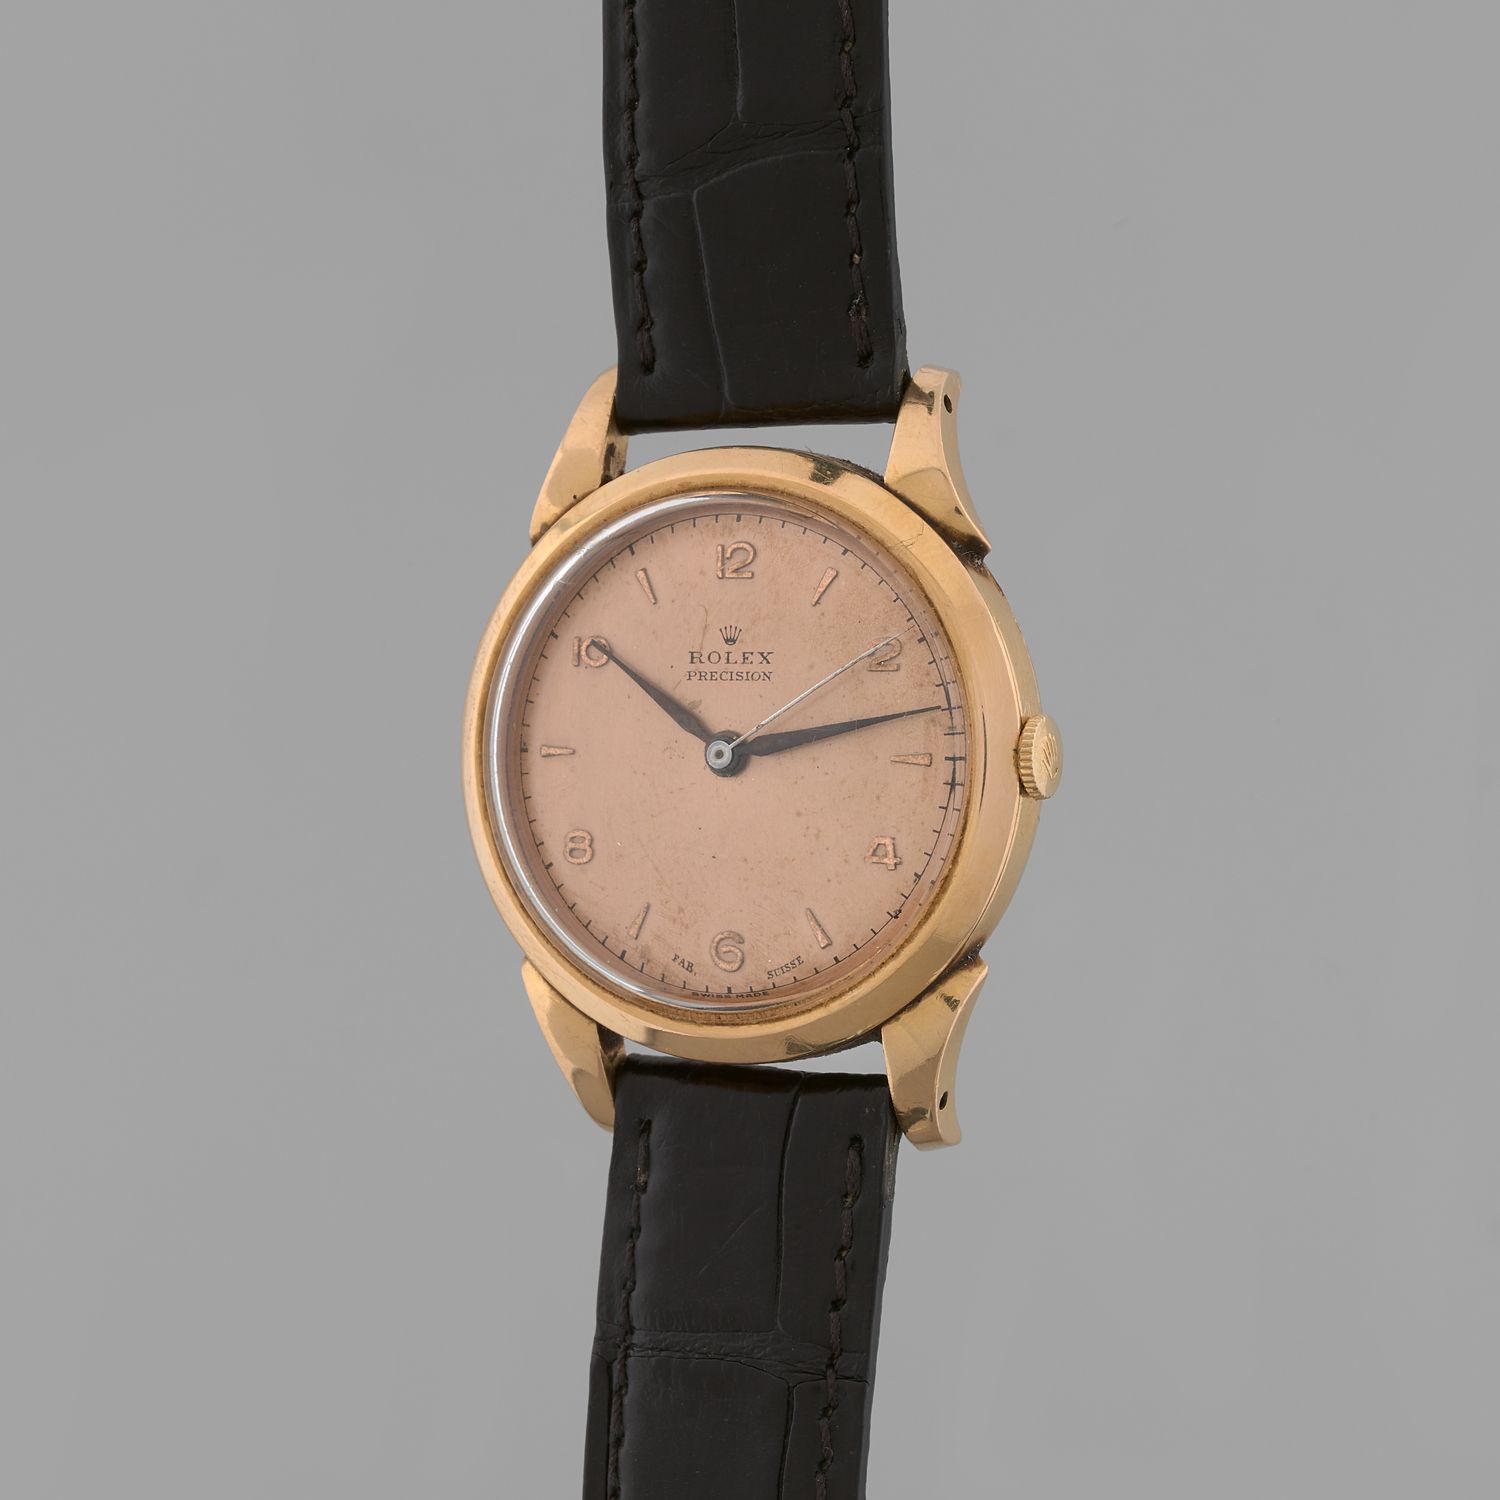 Null ROLEX
精度。 
约：1956年。
750/1000玫瑰金材质的优雅腕表。圆形表壳，背夹式。金色表盘上有ROLEX Précision字样。镀金的&hellip;